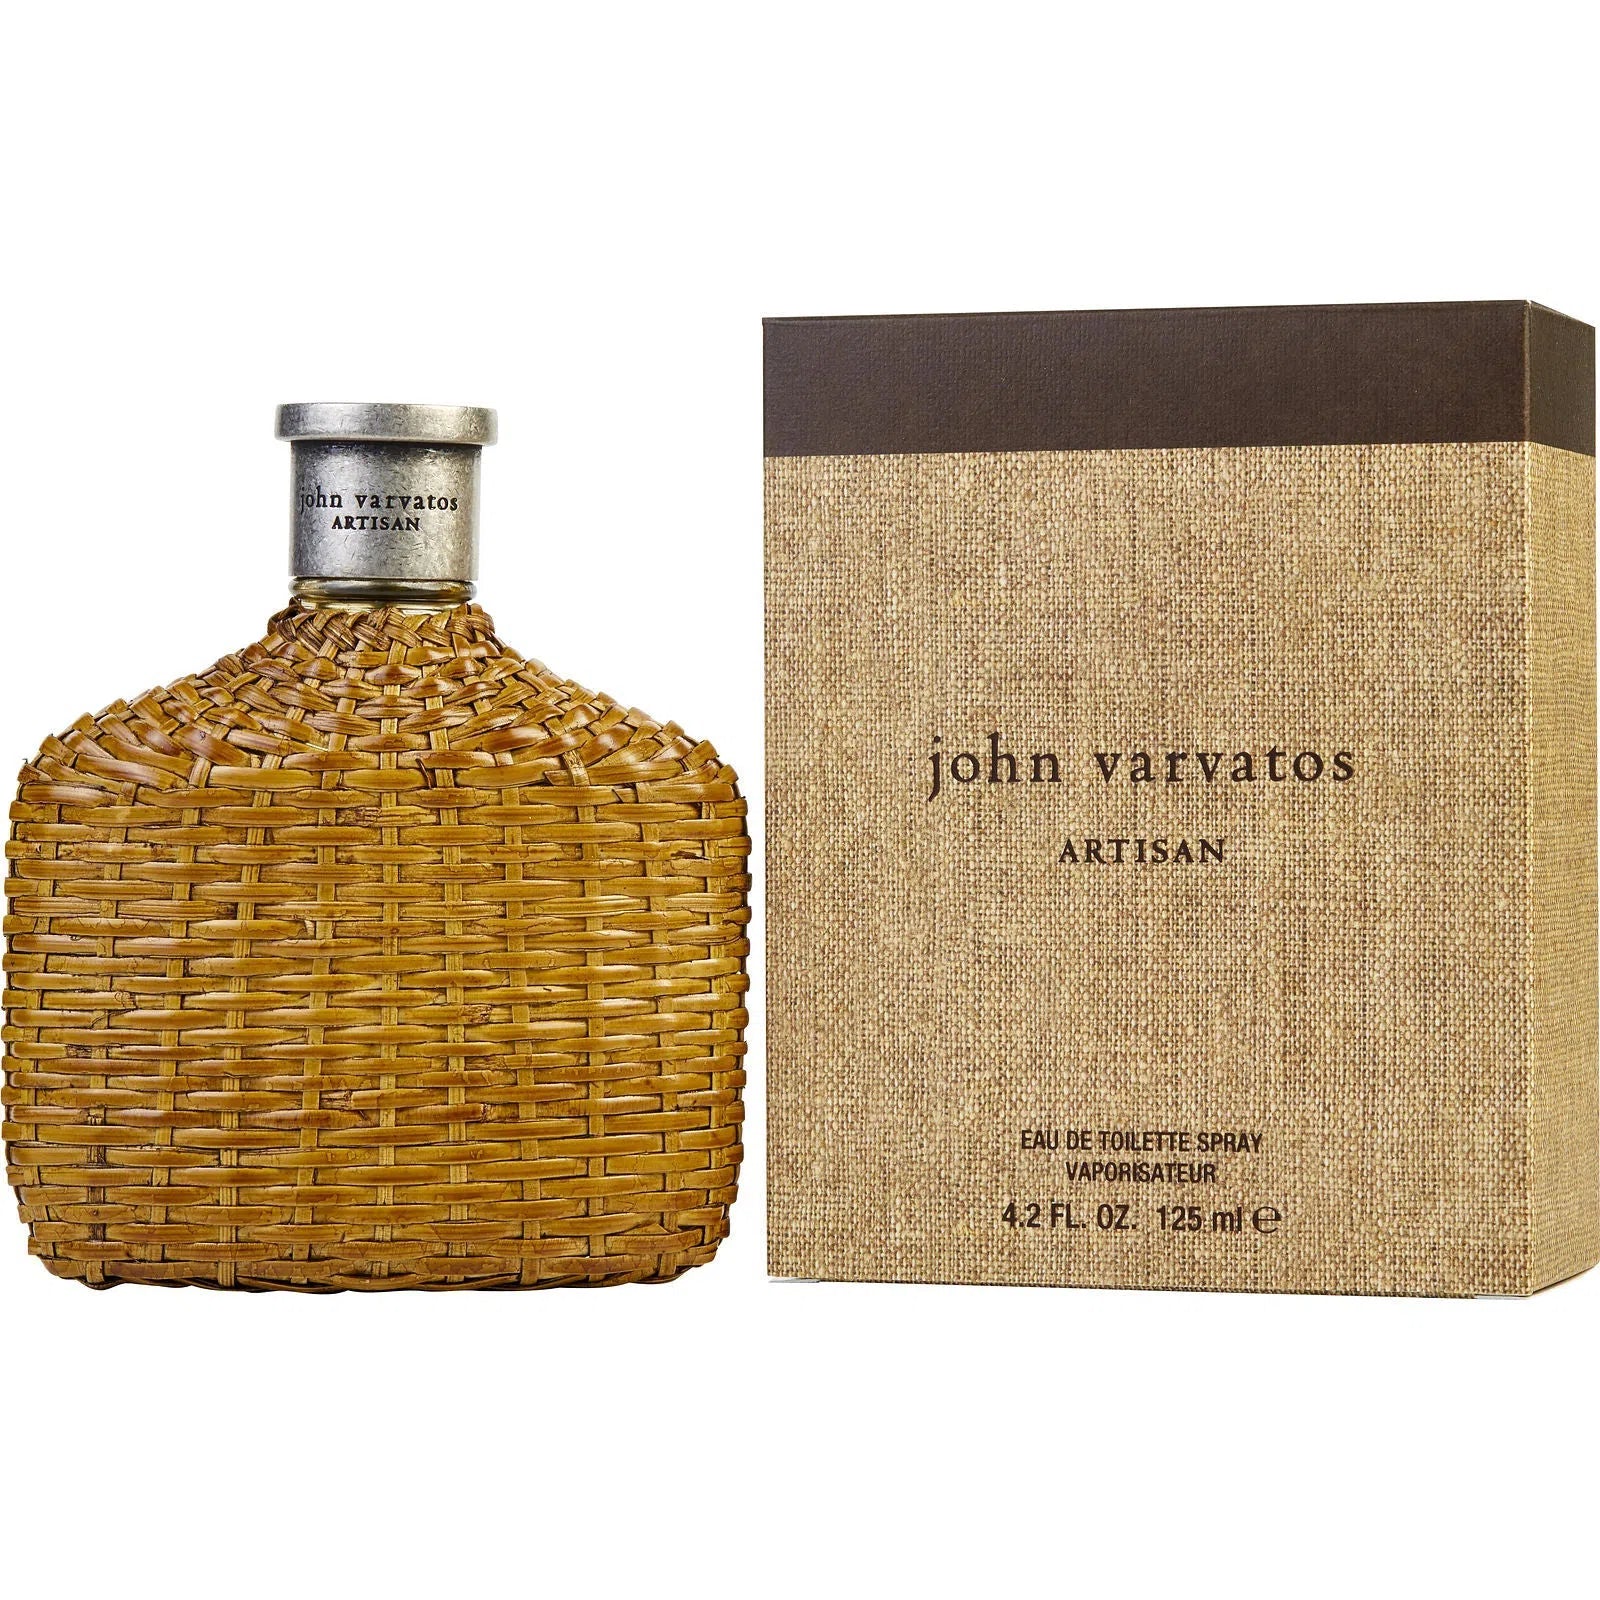 Perfume John Varvatos Artisan EDT (M) / 125 ml - 873824001184- Prive Perfumes Honduras